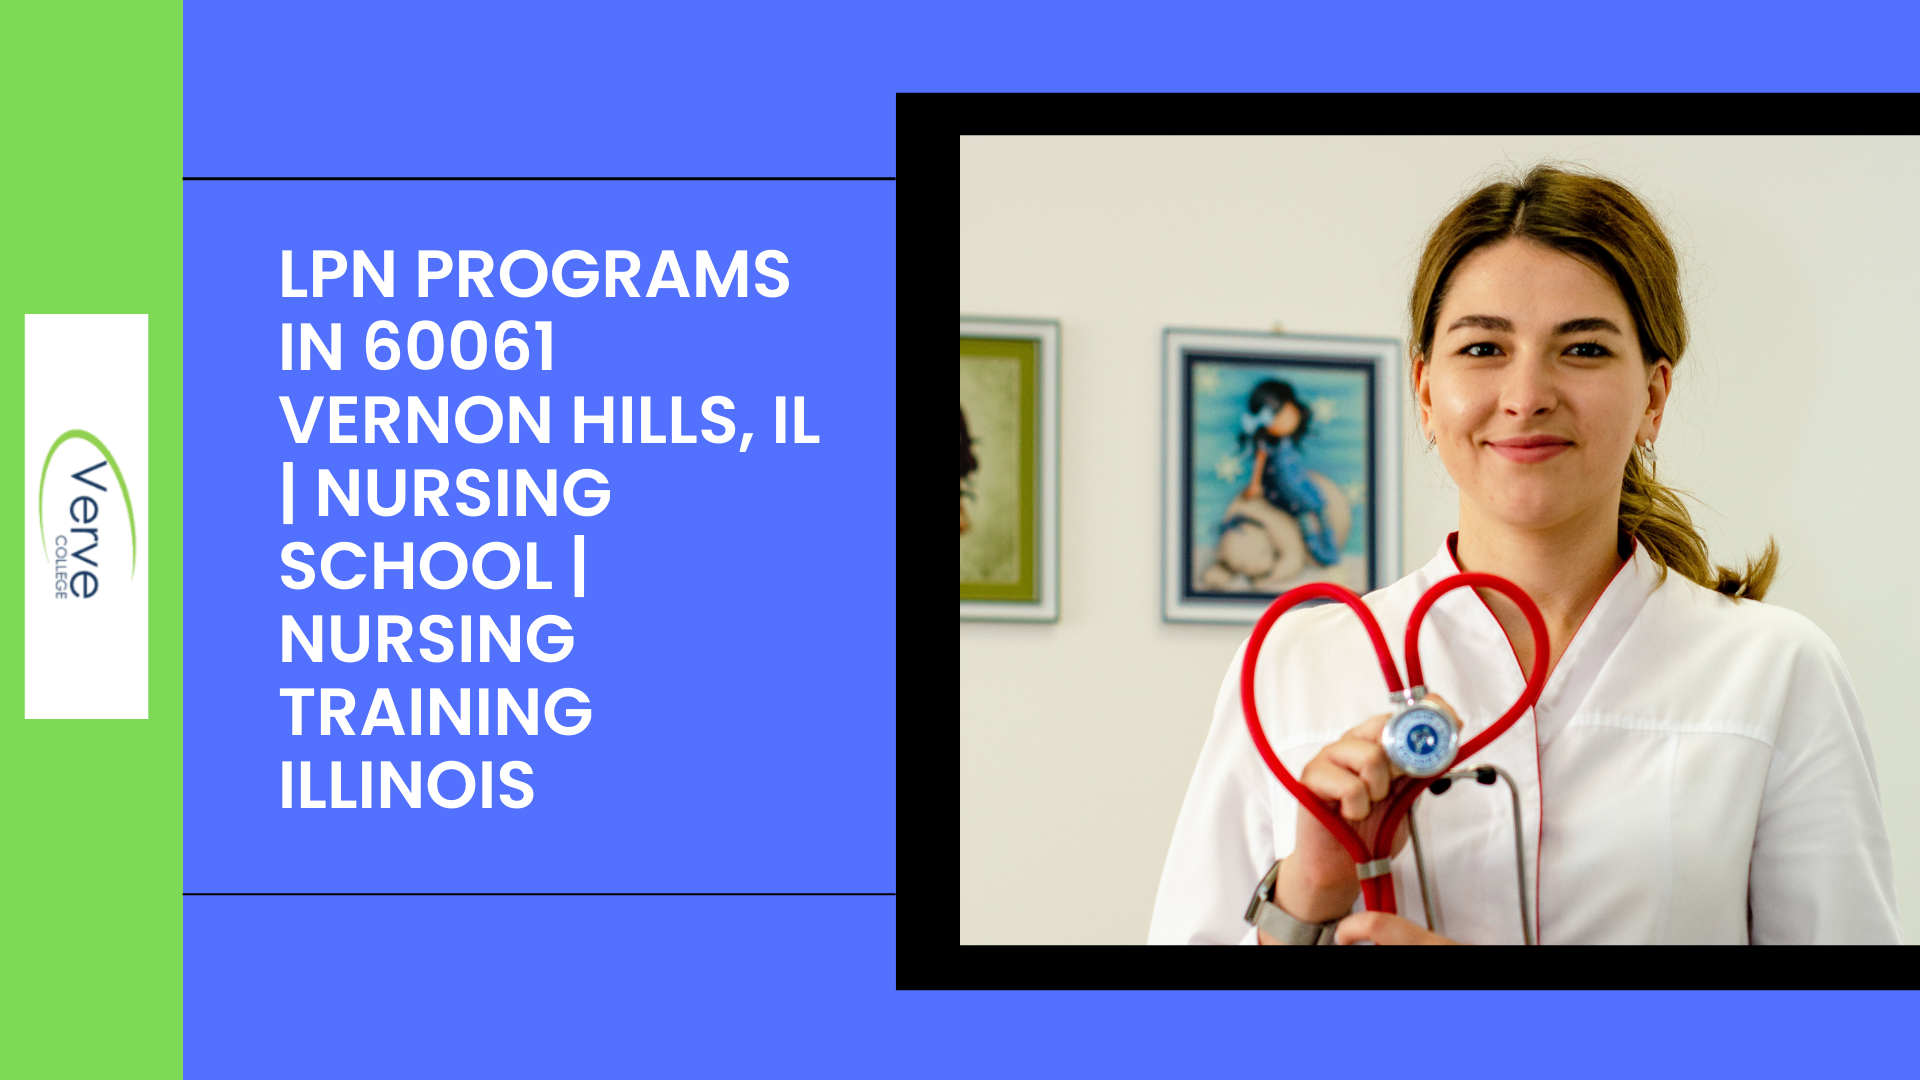 LPN Programs in 60061 Vernon Hills, IL | Nursing School | Nursing Training Illinois